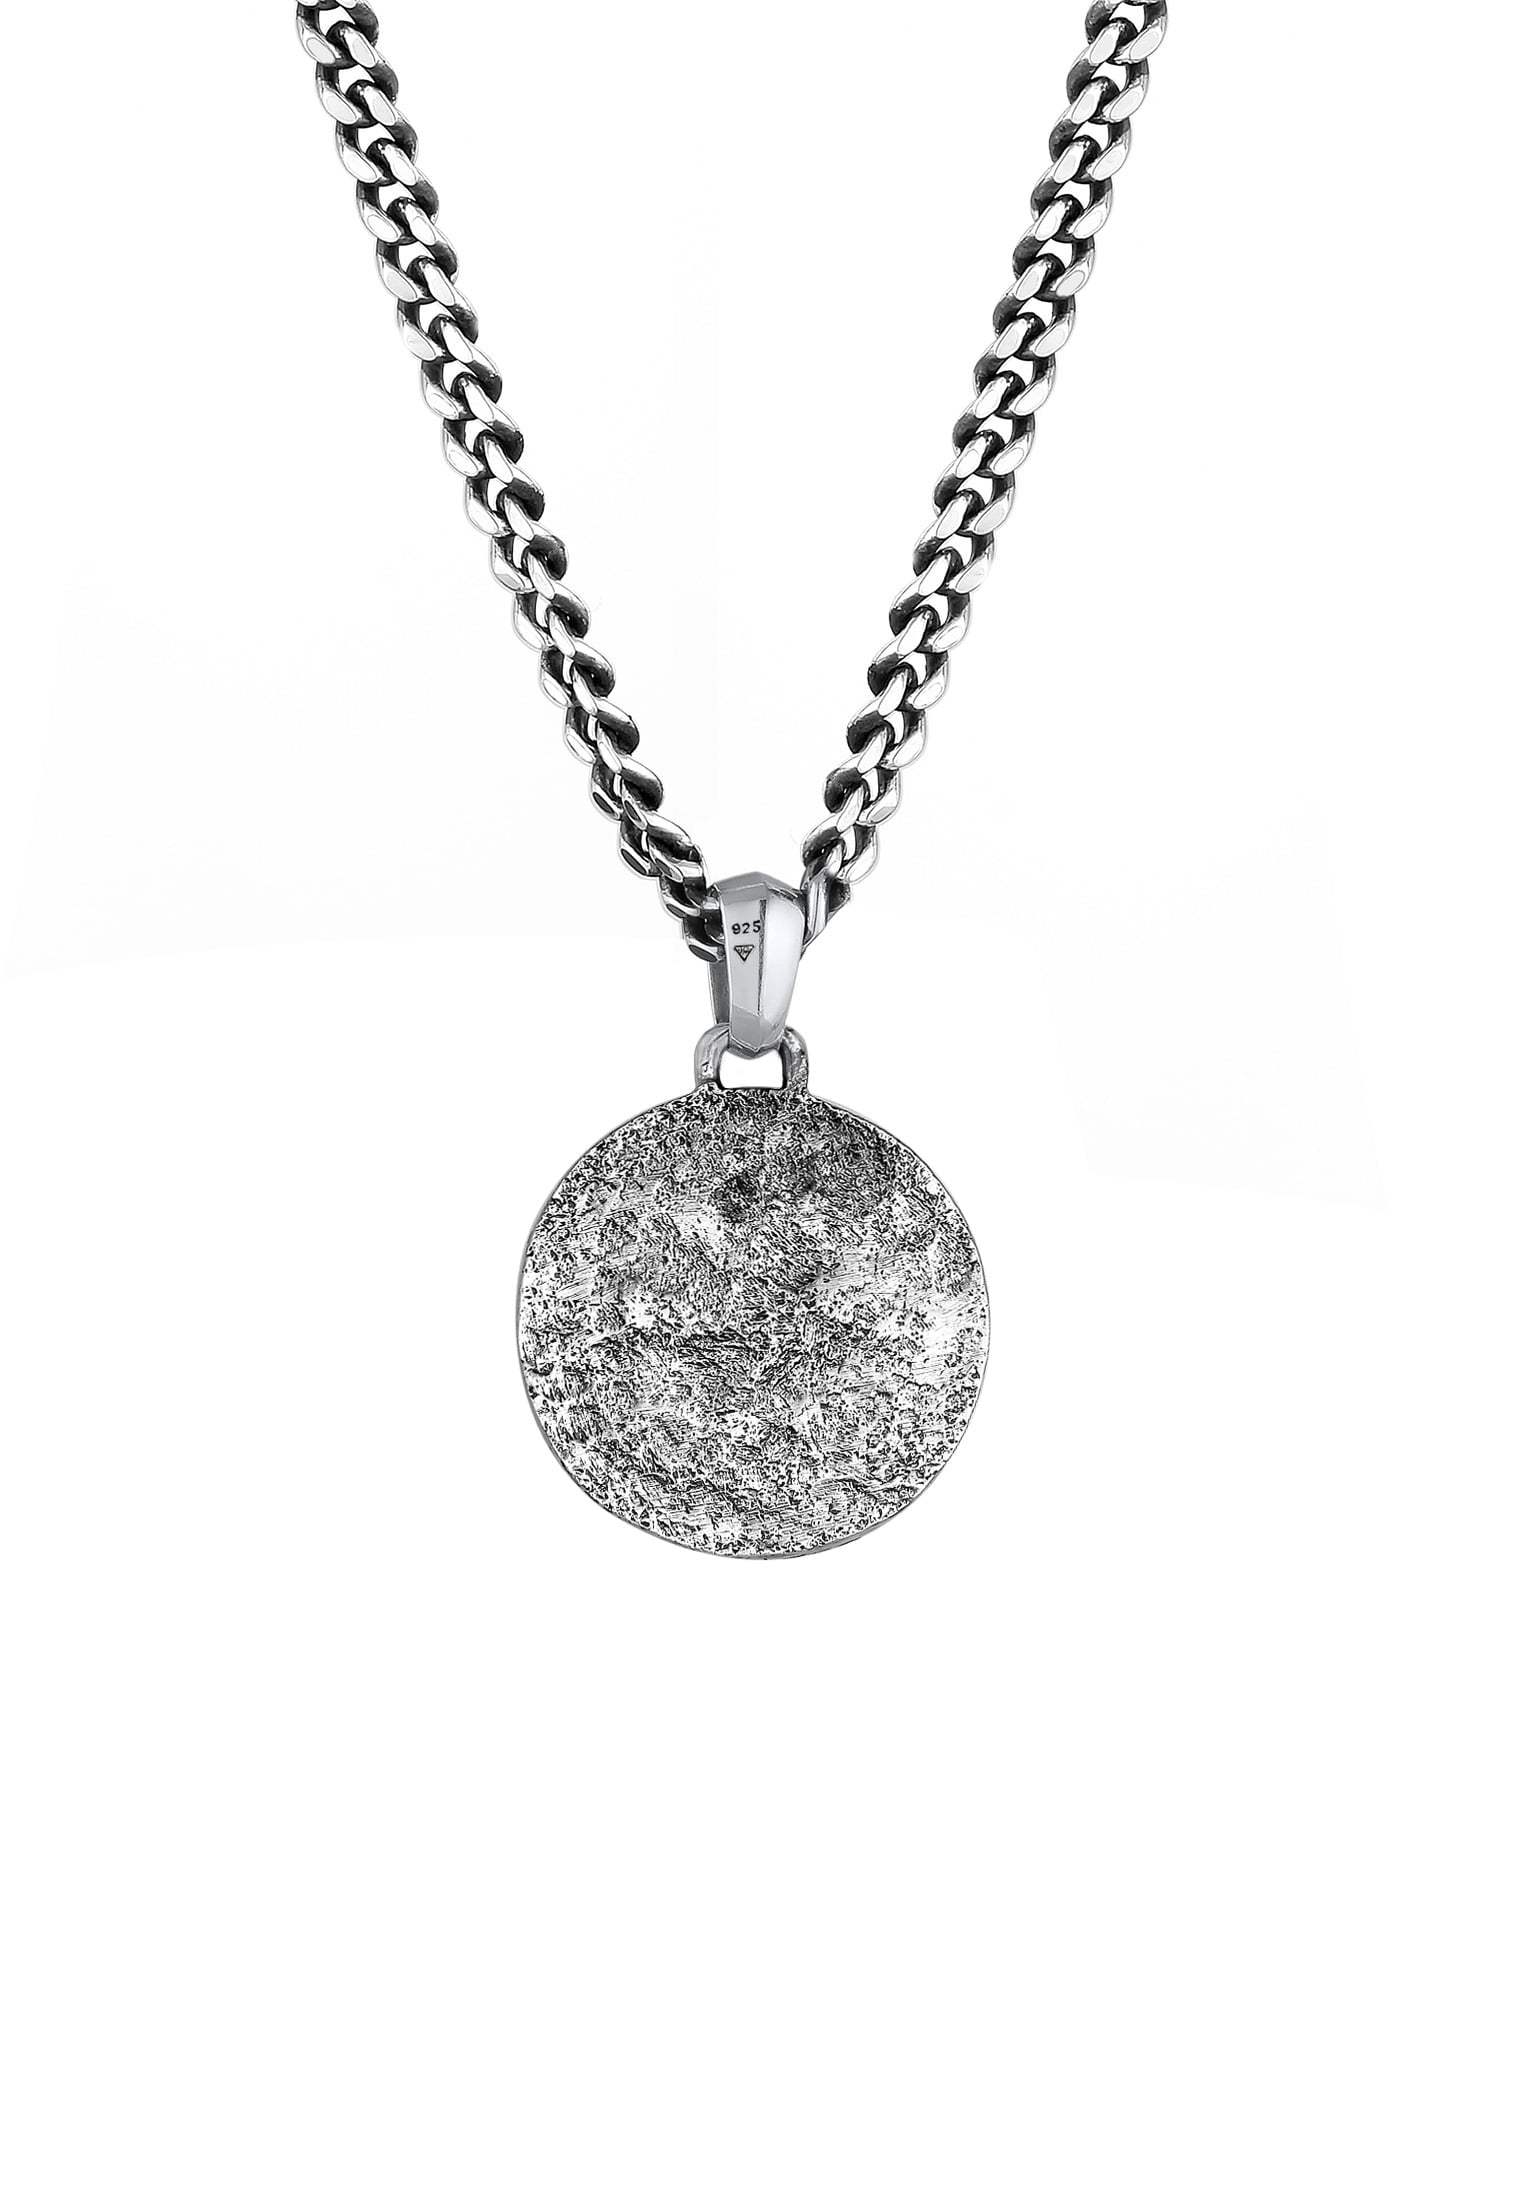 KUZZOI Chain Pendant Necklace Silver 0.20\